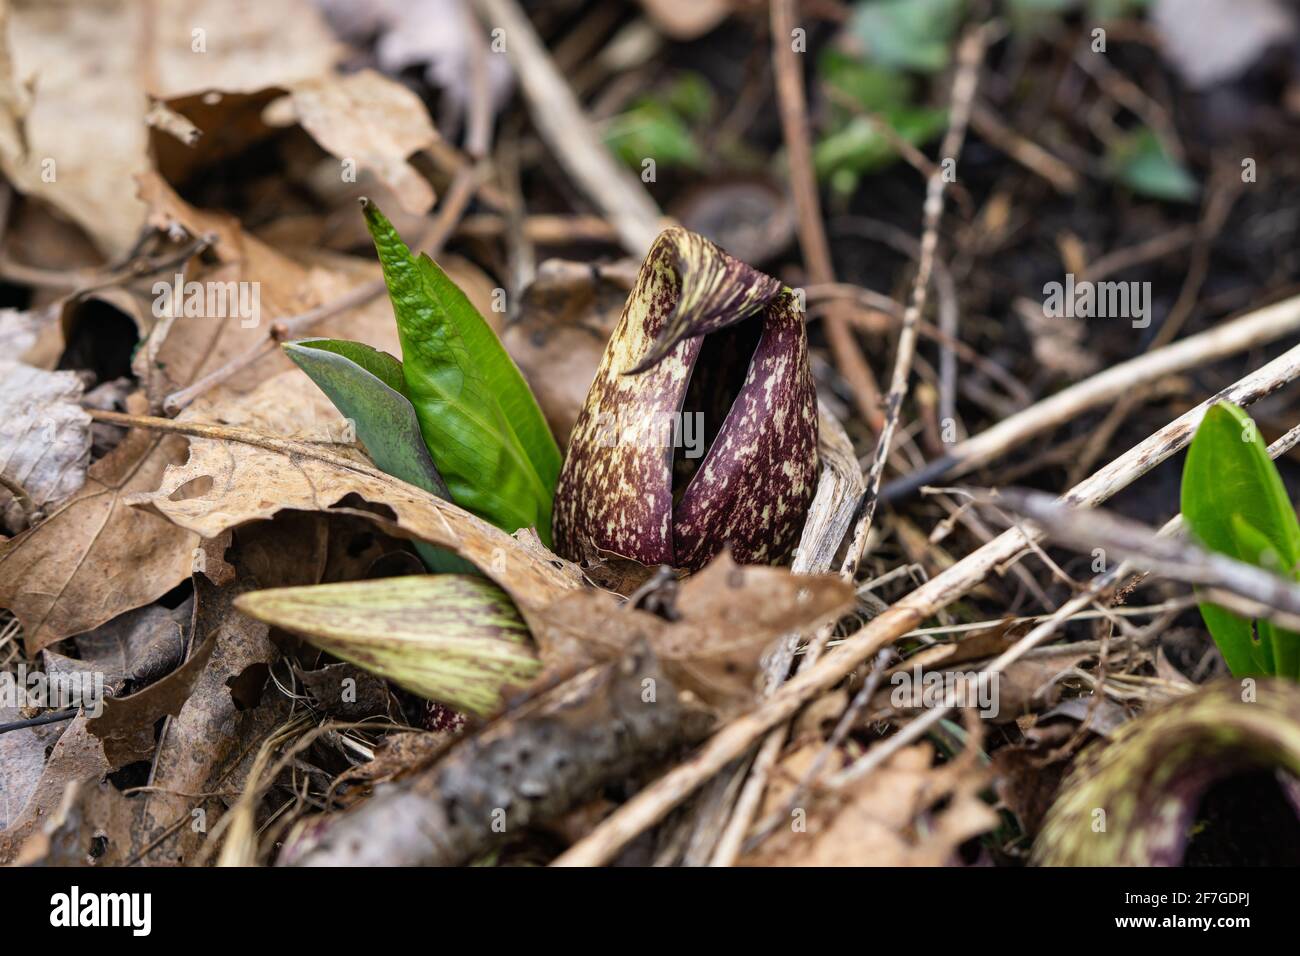 Eastern Skunk Cabbage Emerging in Springtime Stock Photo